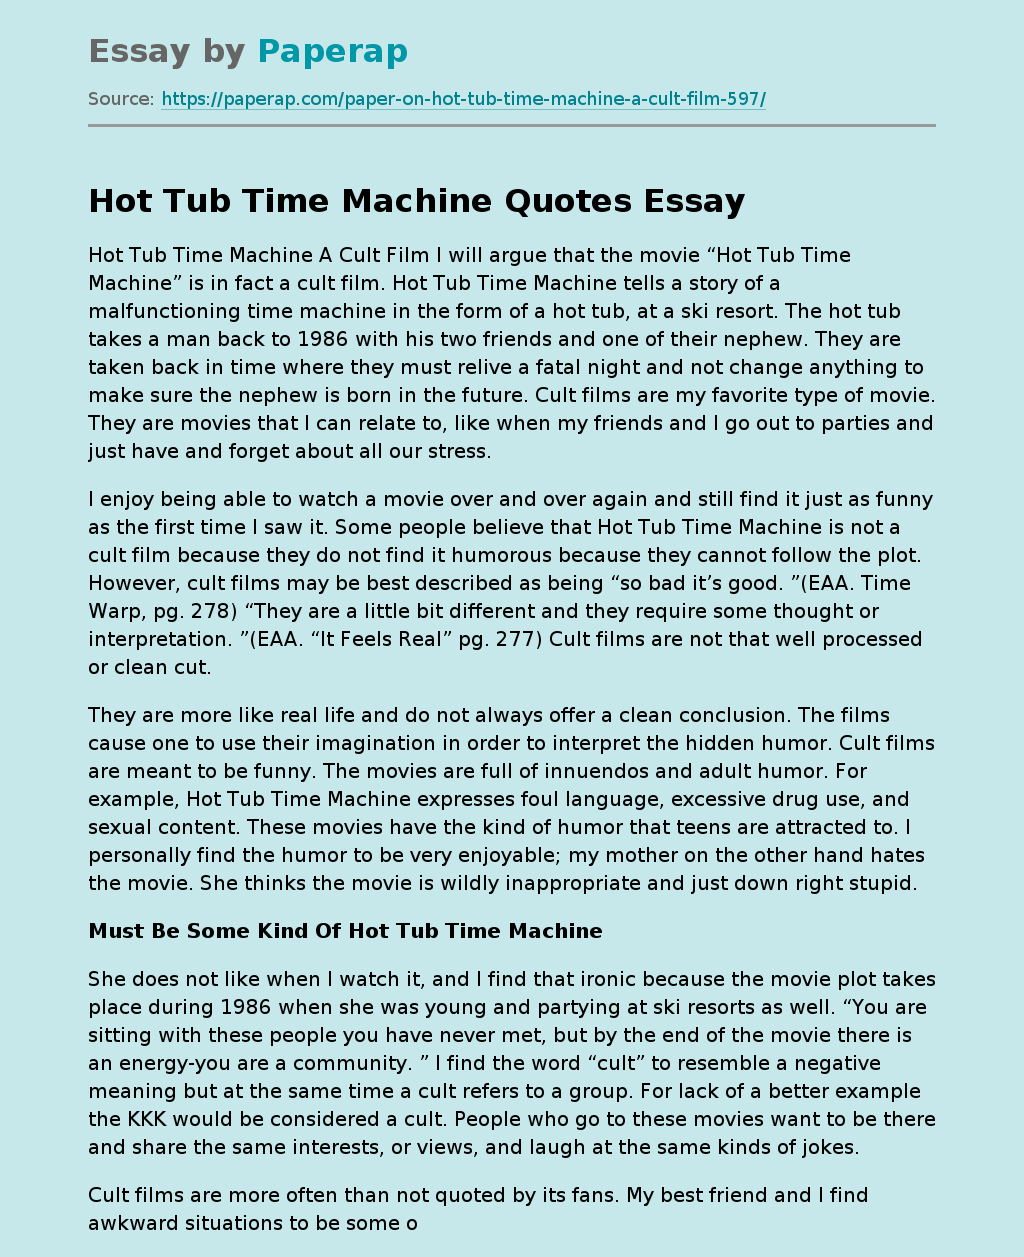 Hot Tub Time Machine Quotes